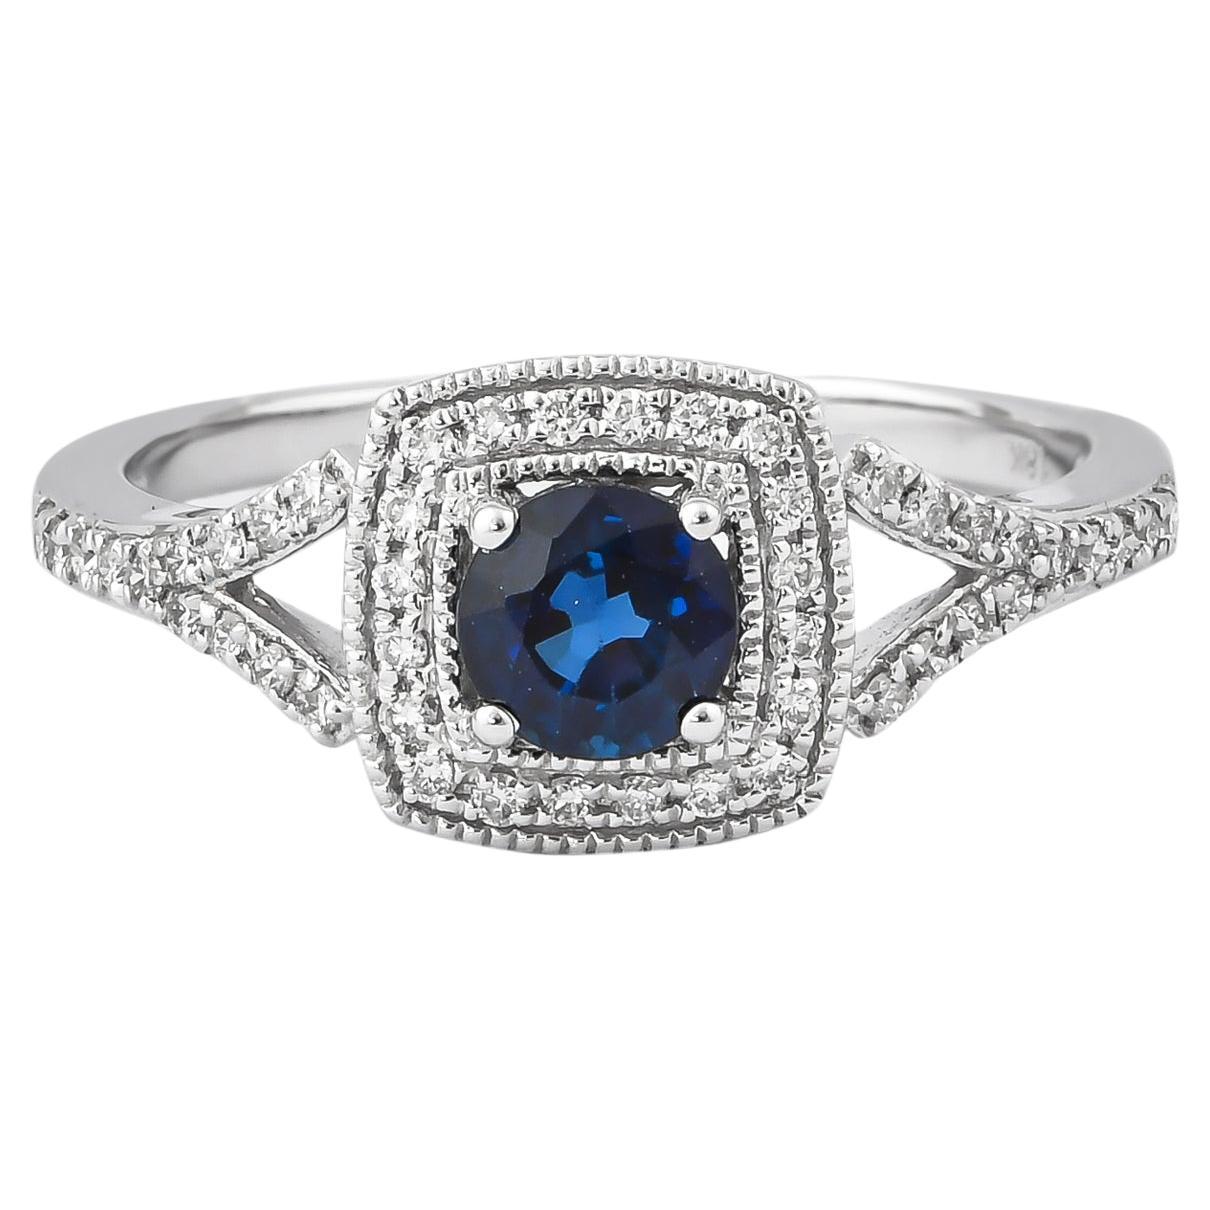 0.7 Carat Blue Sapphire and Diamond Ring in 18 Karat White Gold